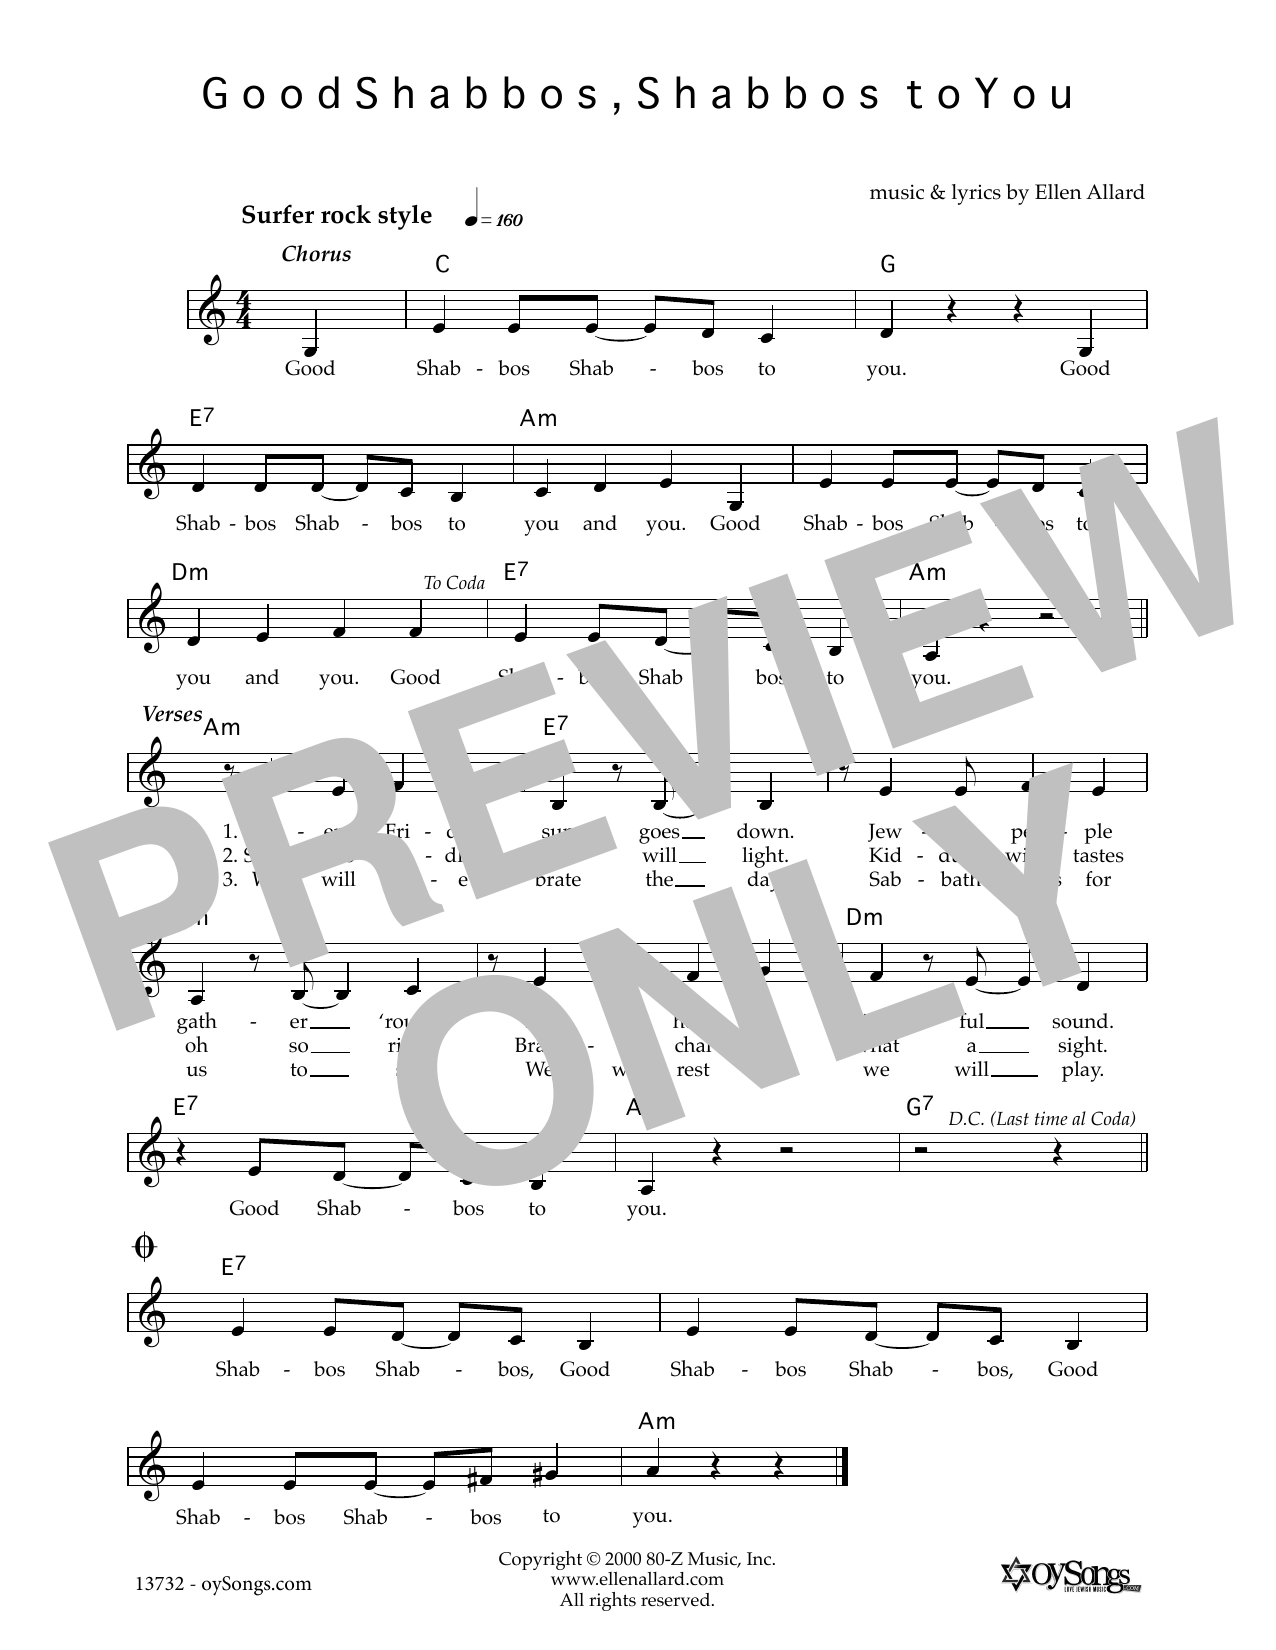 Ellen Allard Good Shabbos Sheet Music Notes & Chords for Melody Line, Lyrics & Chords - Download or Print PDF